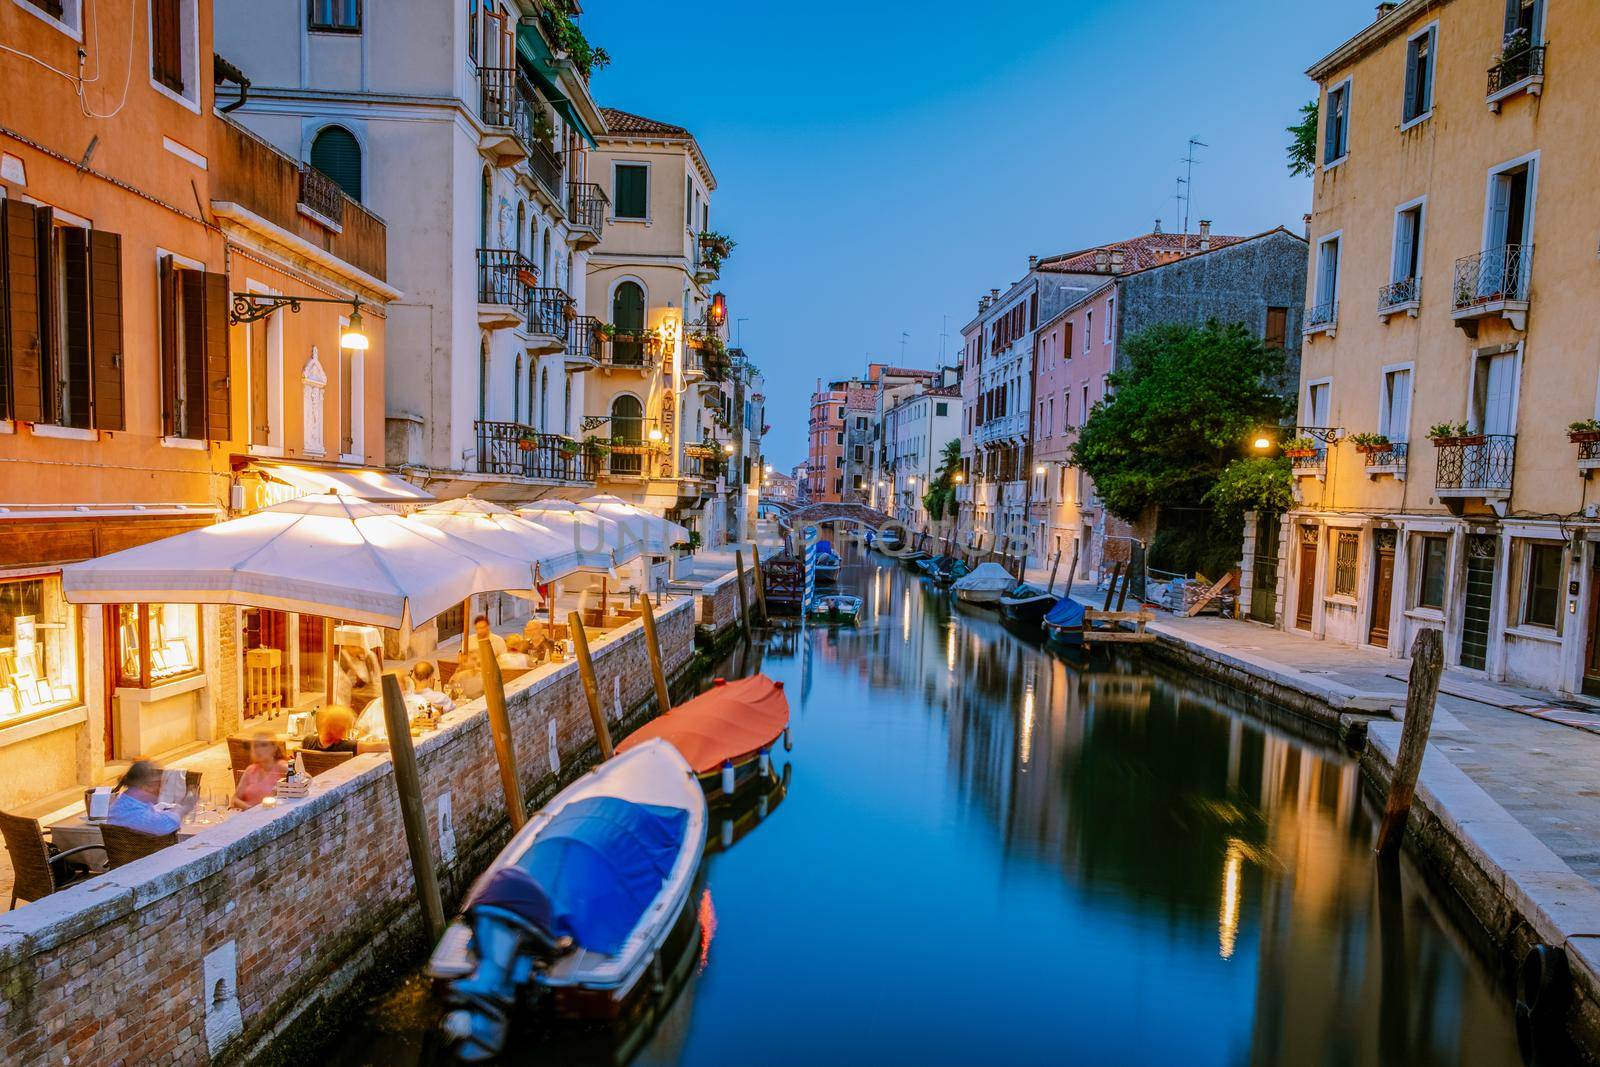 Beautiful venetian street in summer day, Italy. Venice Europe